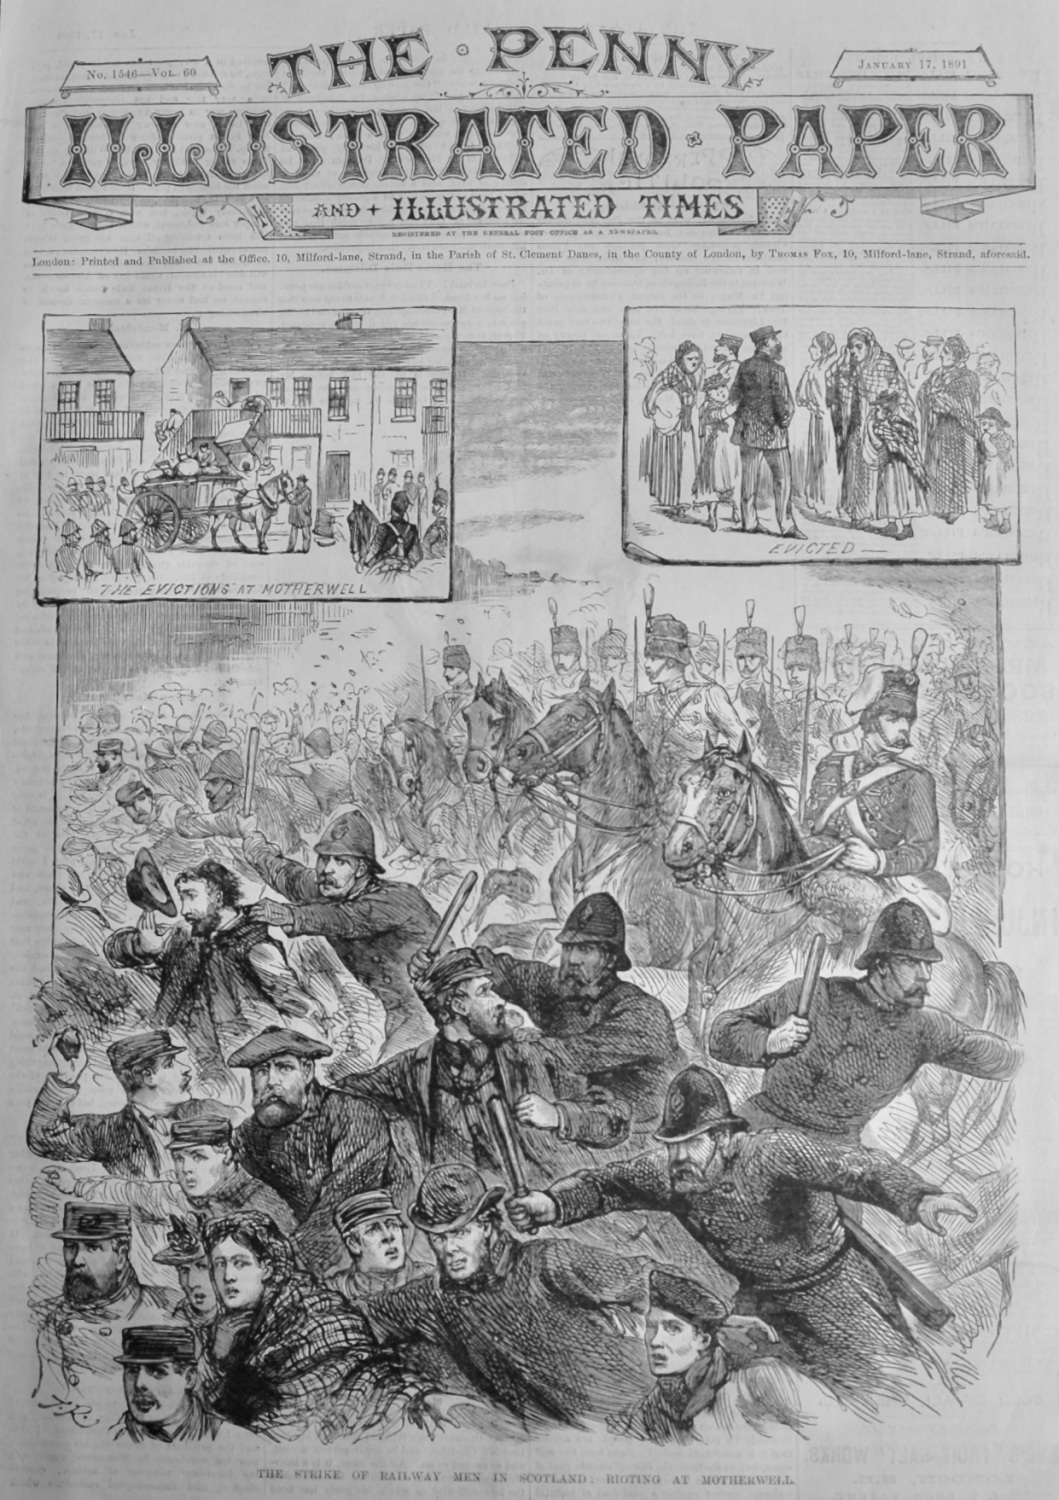 The Strike of Railway Men in Scotland :  Rioting at Motherwell.  1891.